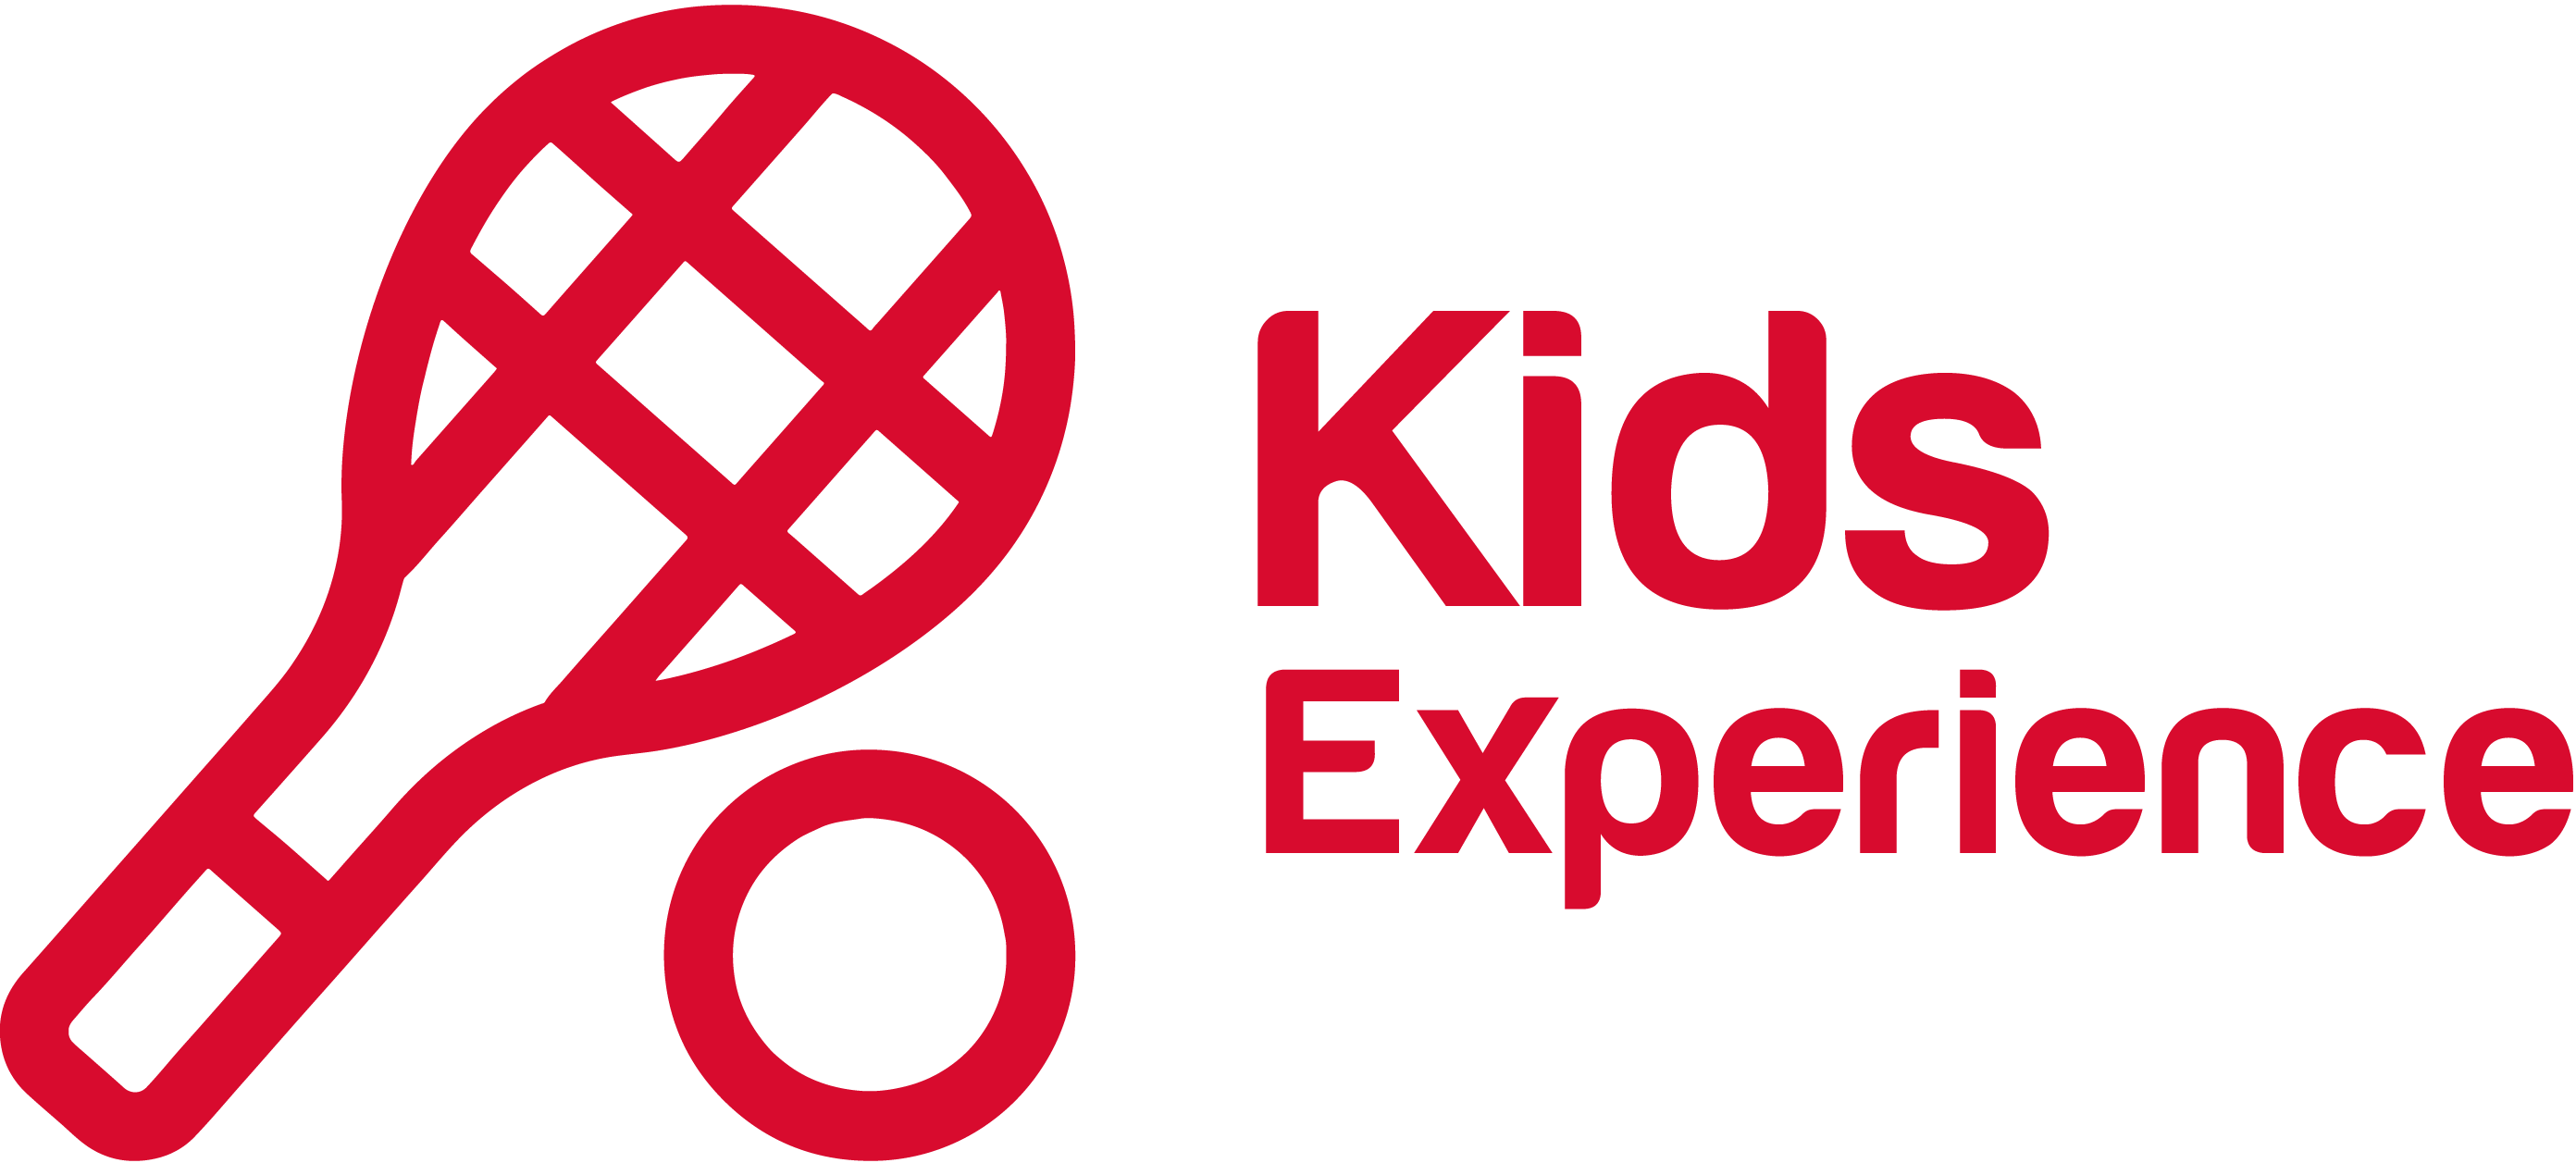 Kids experience ico